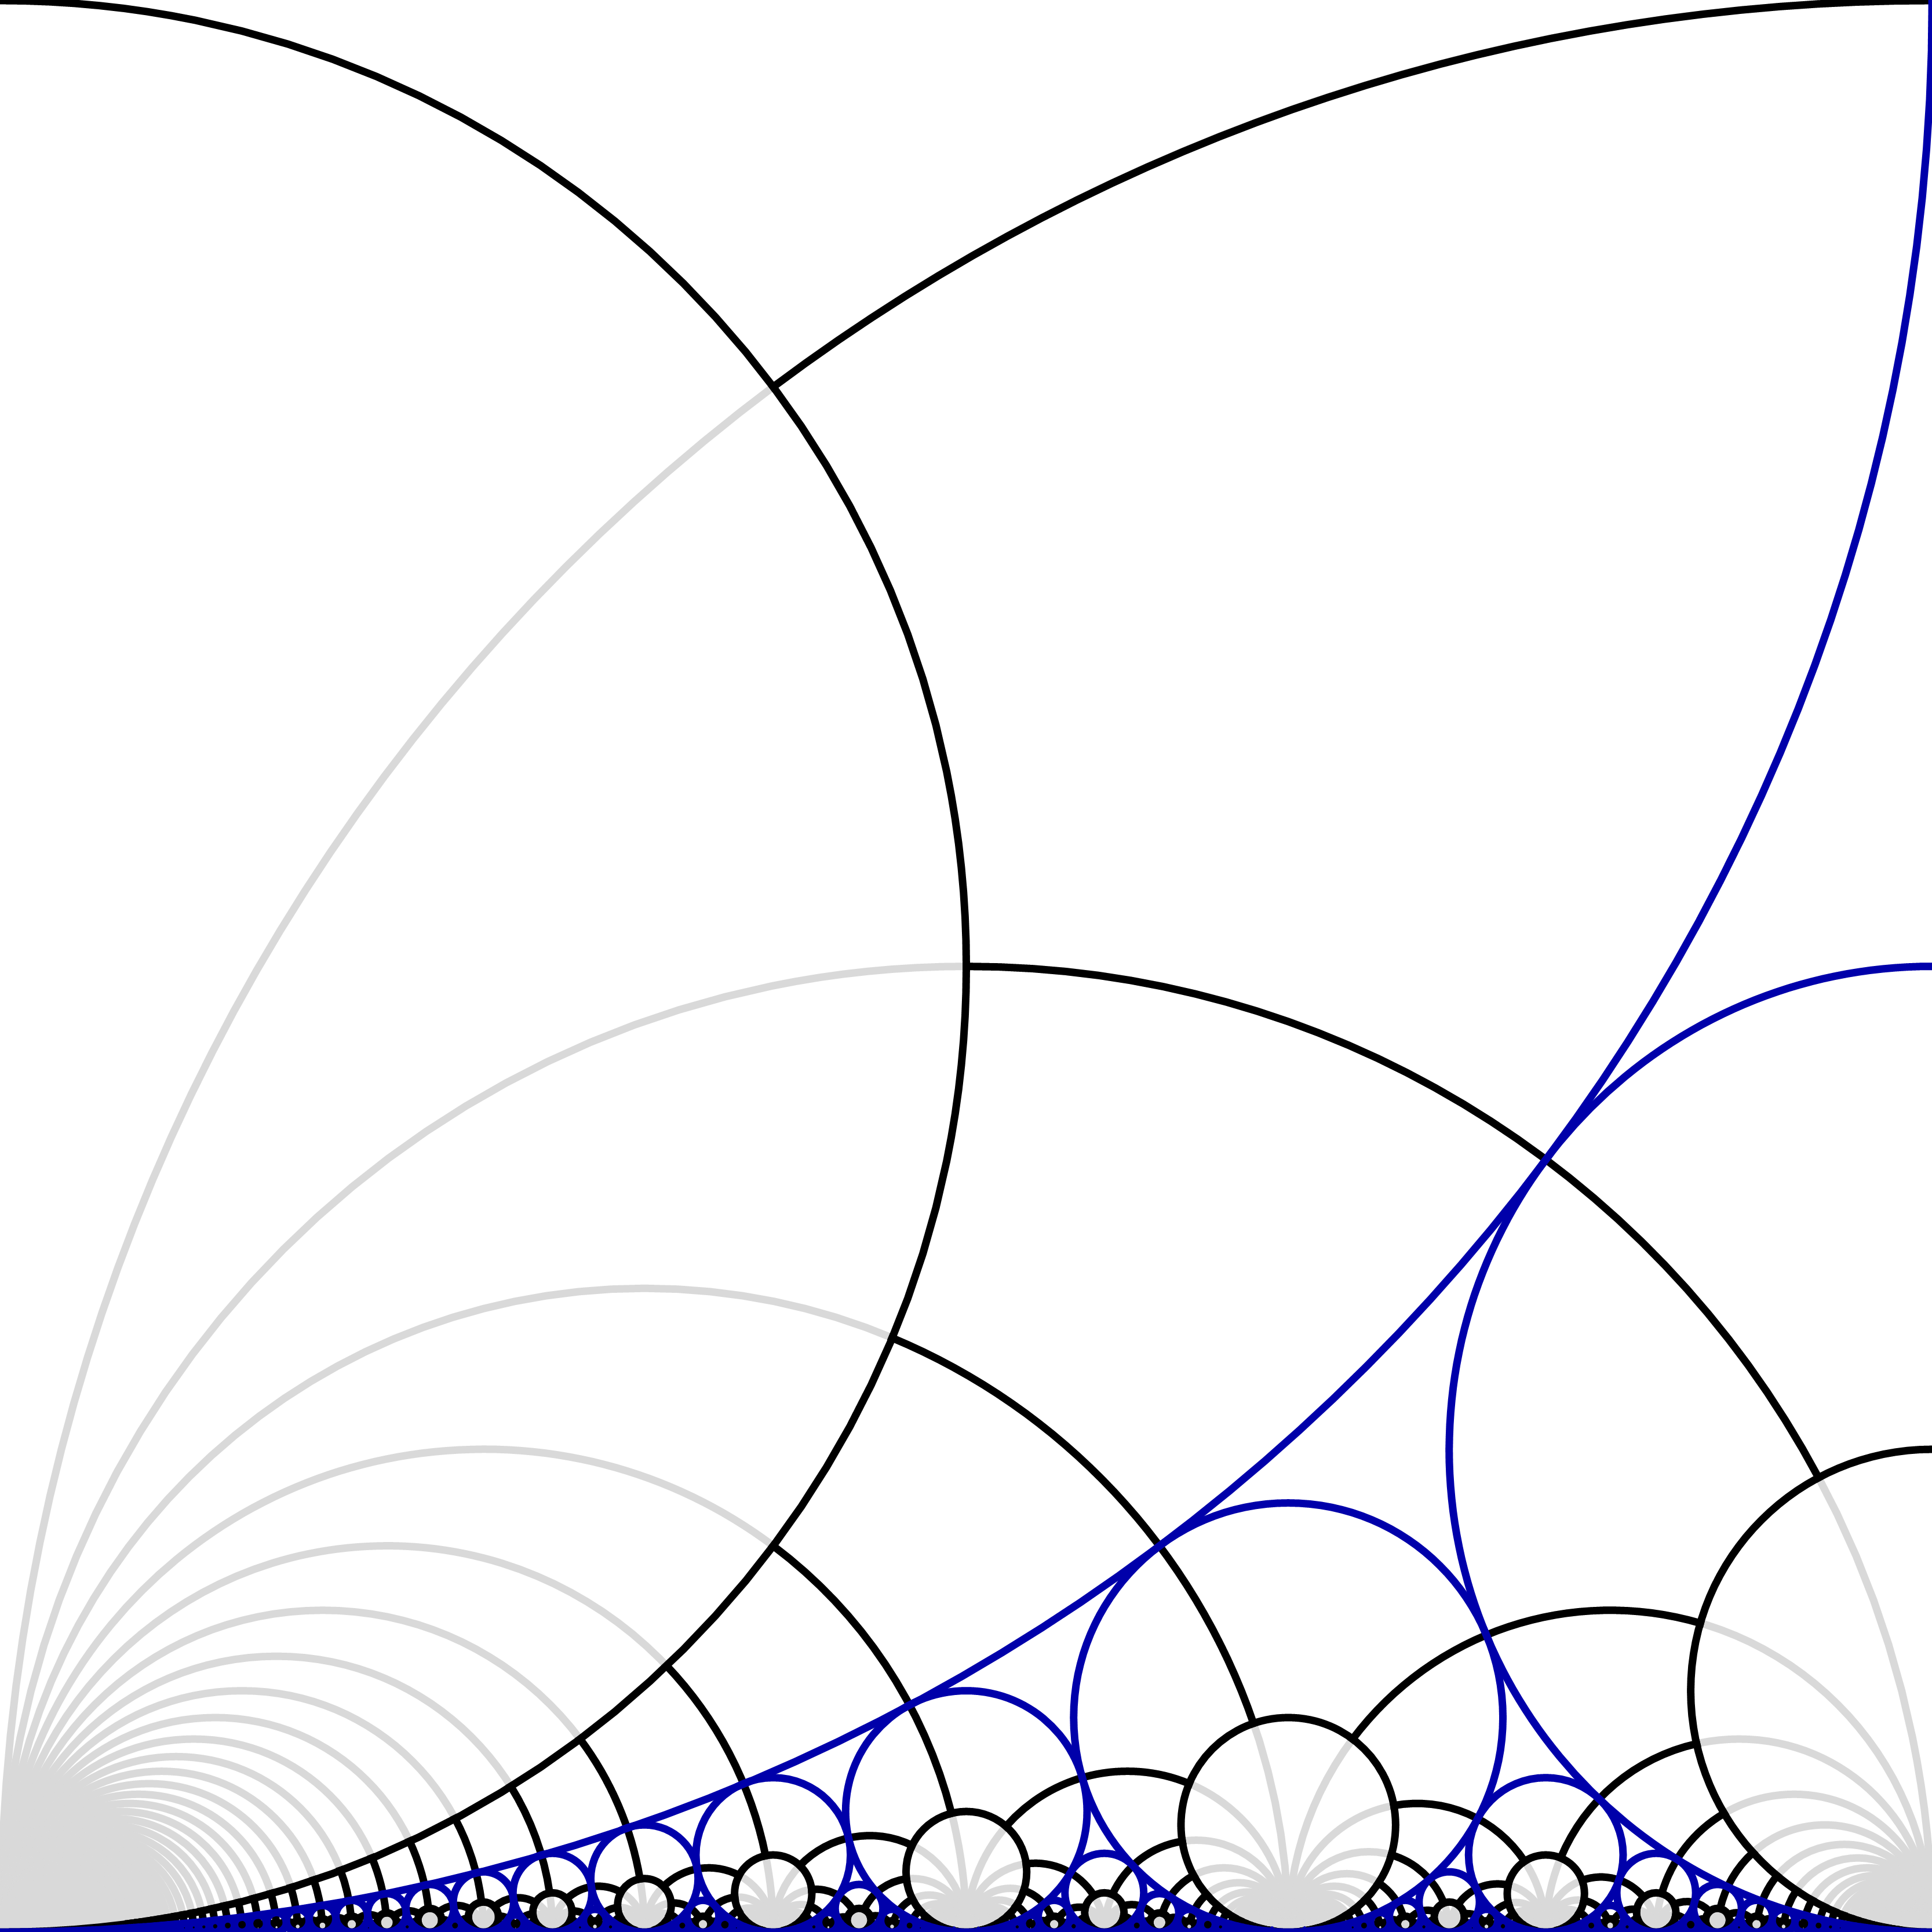 Farey graph, Ford circles, and the truncated Farey graph